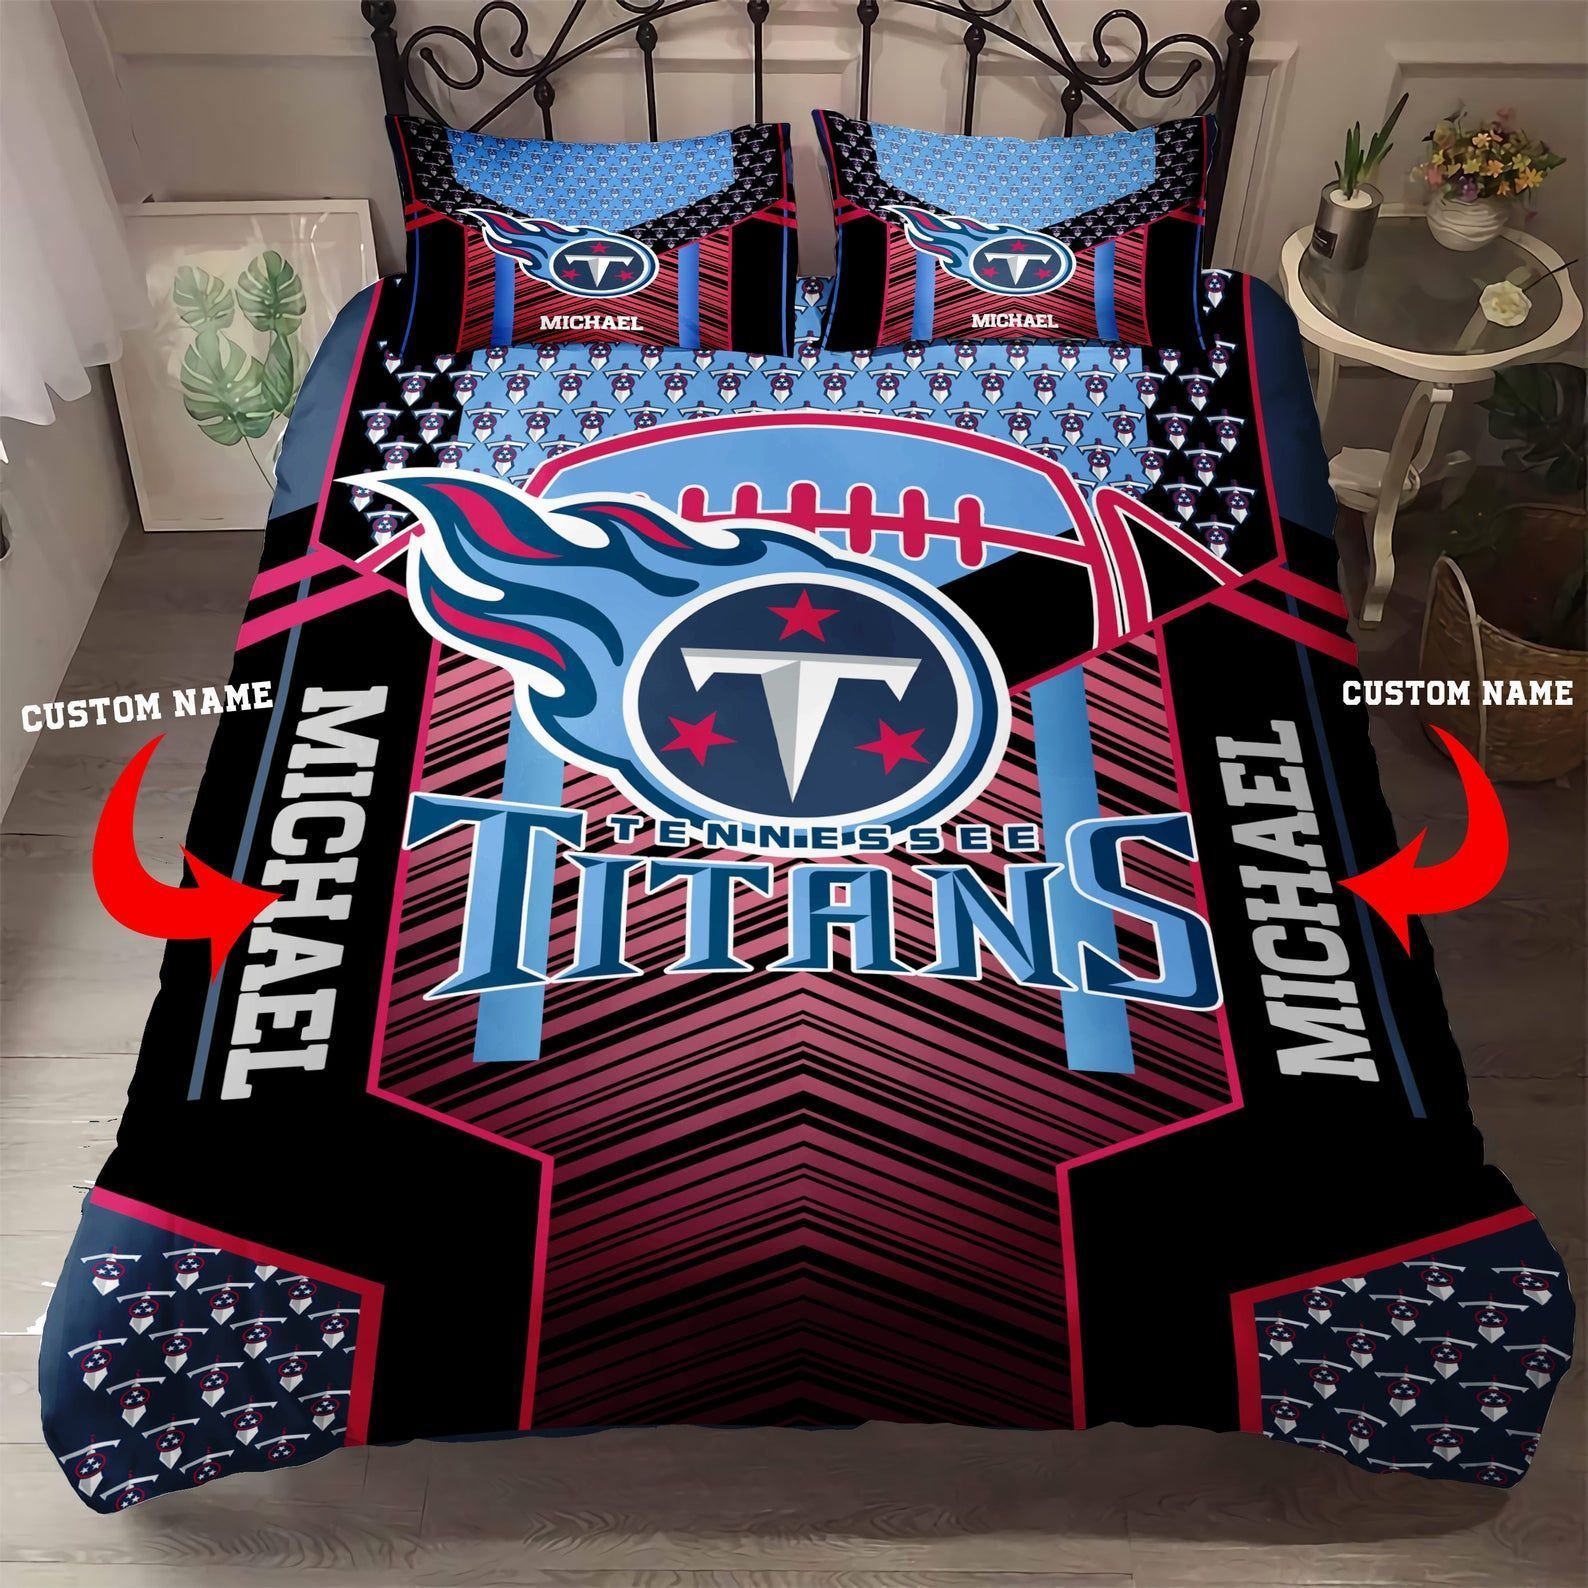 Custom Name Tennessee Titans Bedding Set